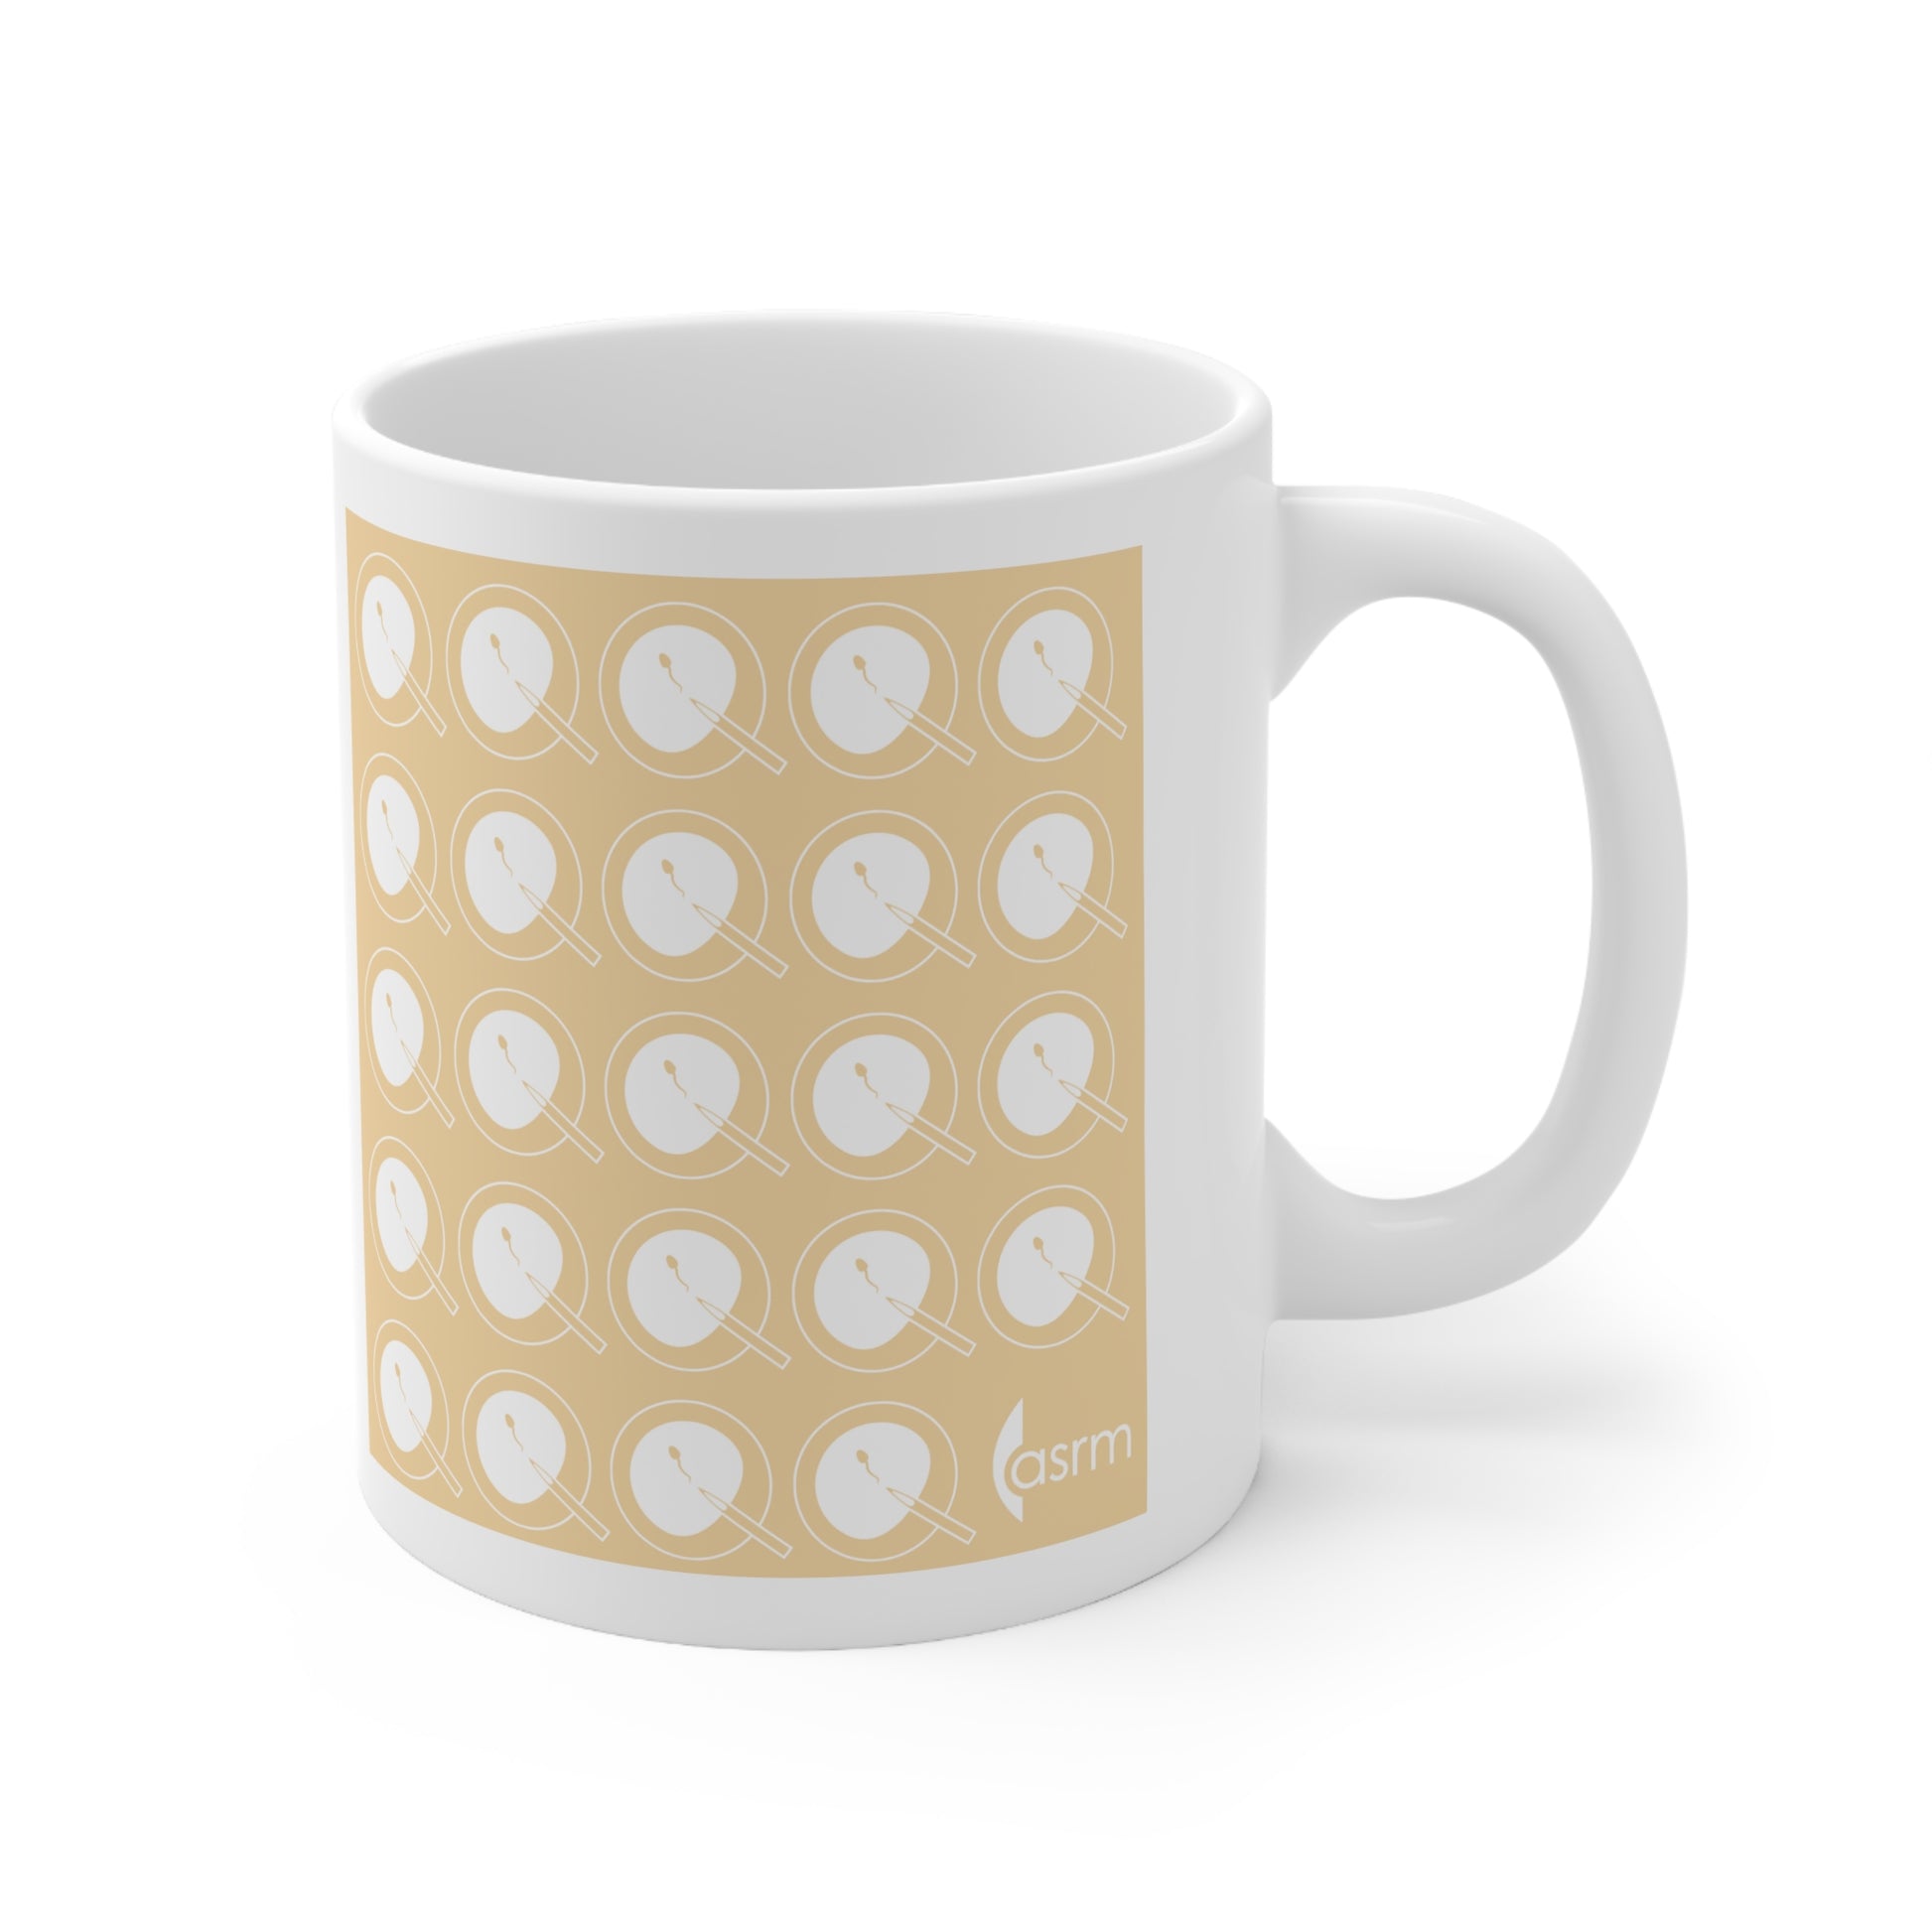 How do you Like Your Eggs? White Glossy Mug modeled handle right